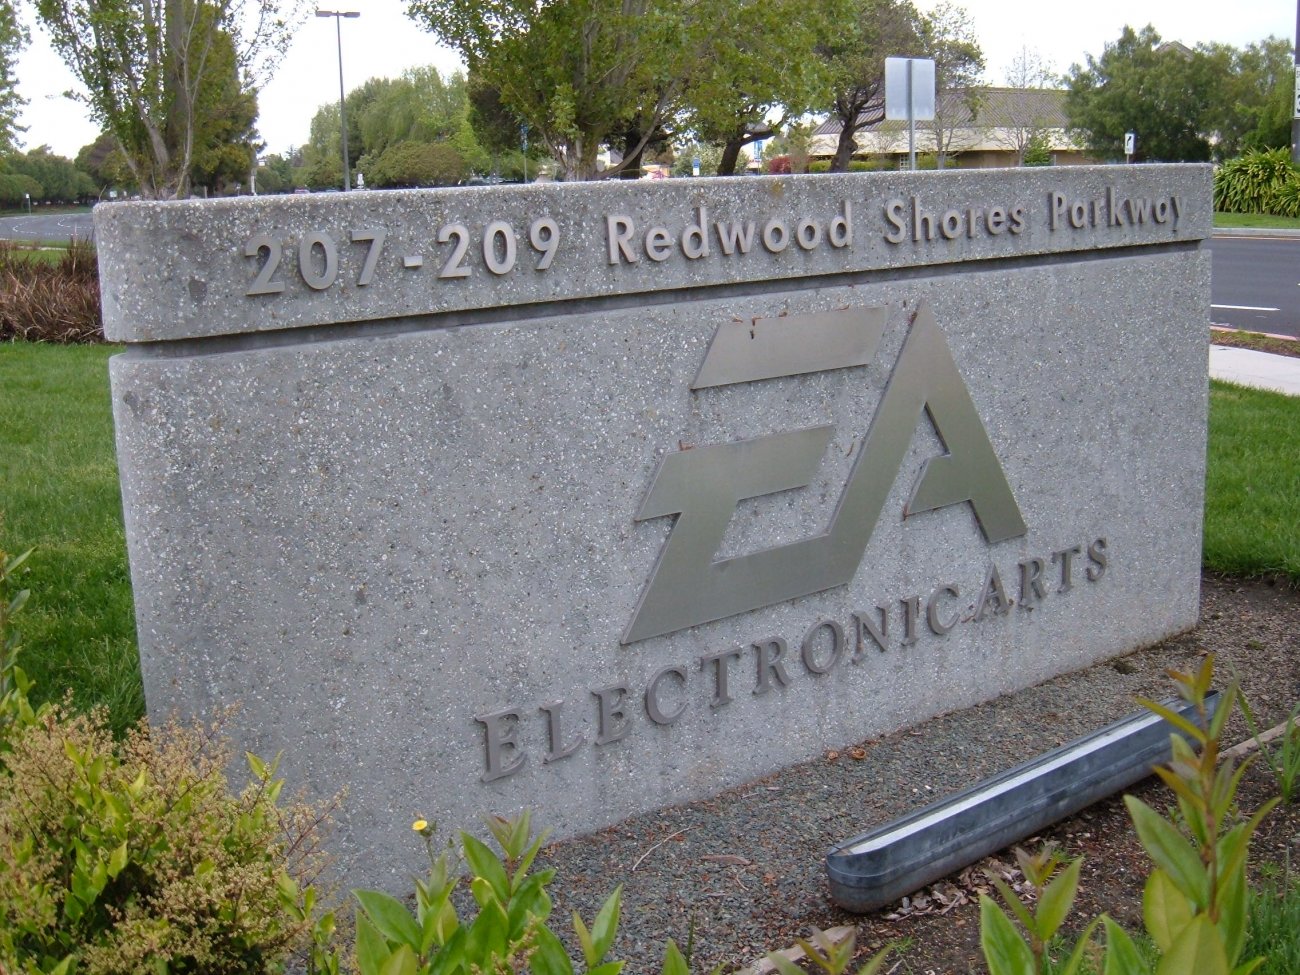 EA announces close to 1 billion USD in revenue from microtransactions. Image via EA.